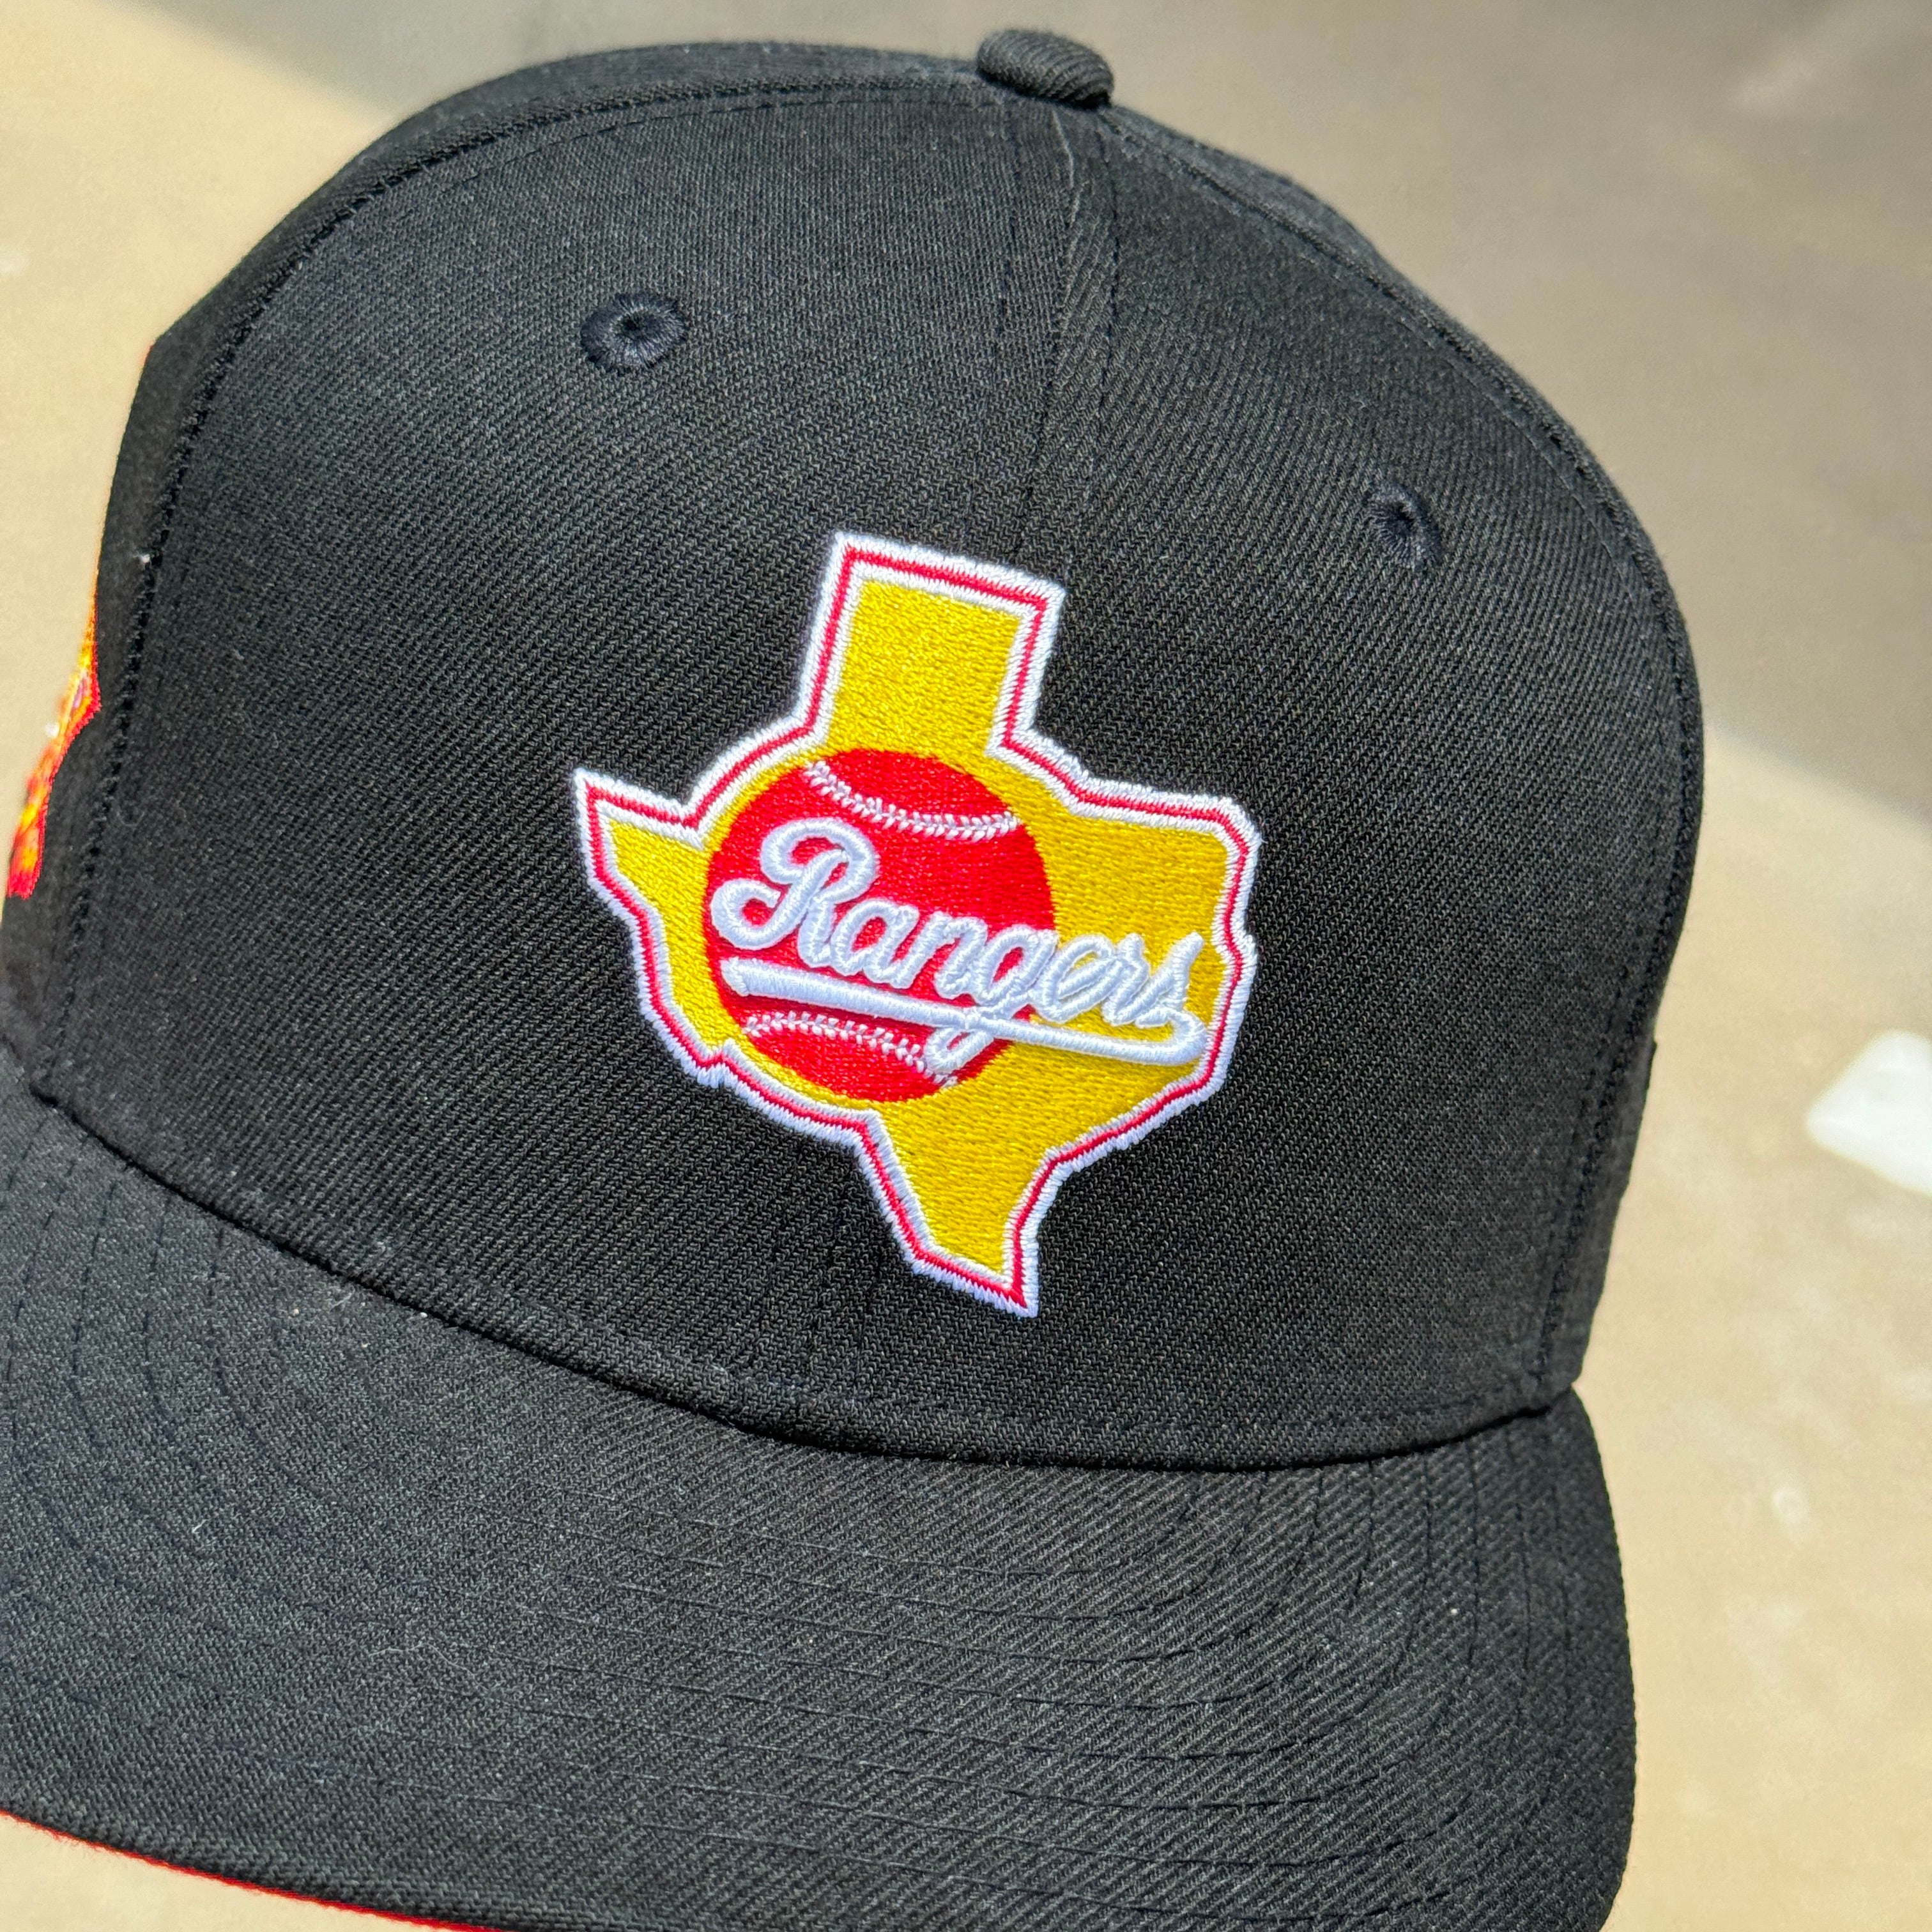 USED 1/8 Black Dallas Texas Rangers Arlington Stadium 59fifty New Era Fitted Hat Cap